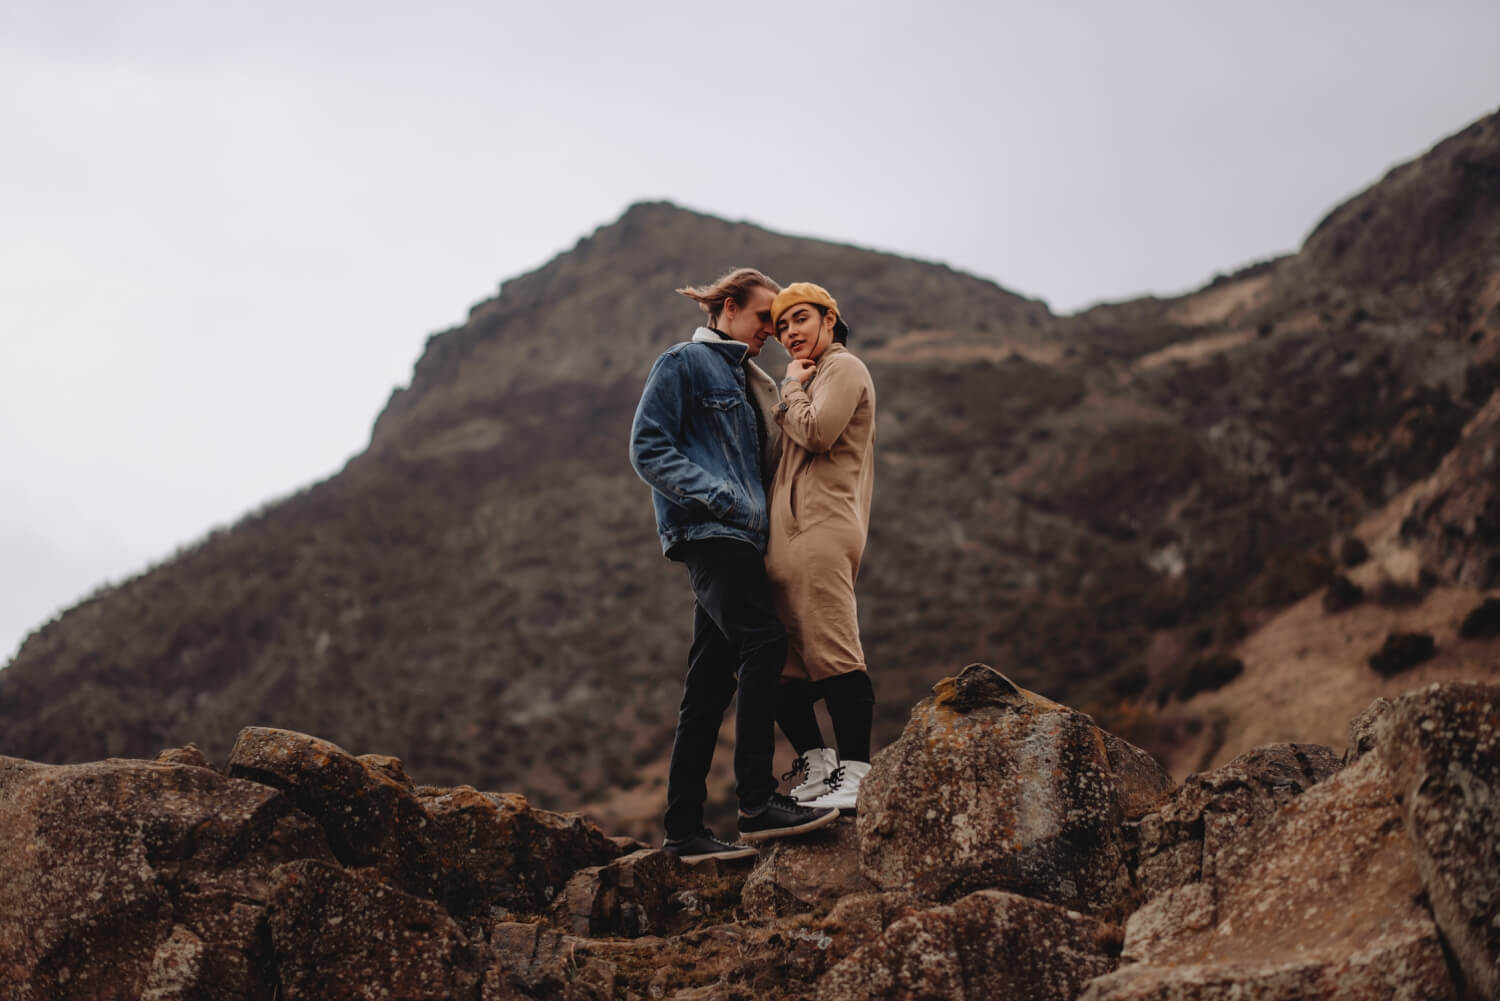 Scotland Couple Photoshoot - Destination wedding photographer - The Adamkovi, scotland highlands , windy couple in love